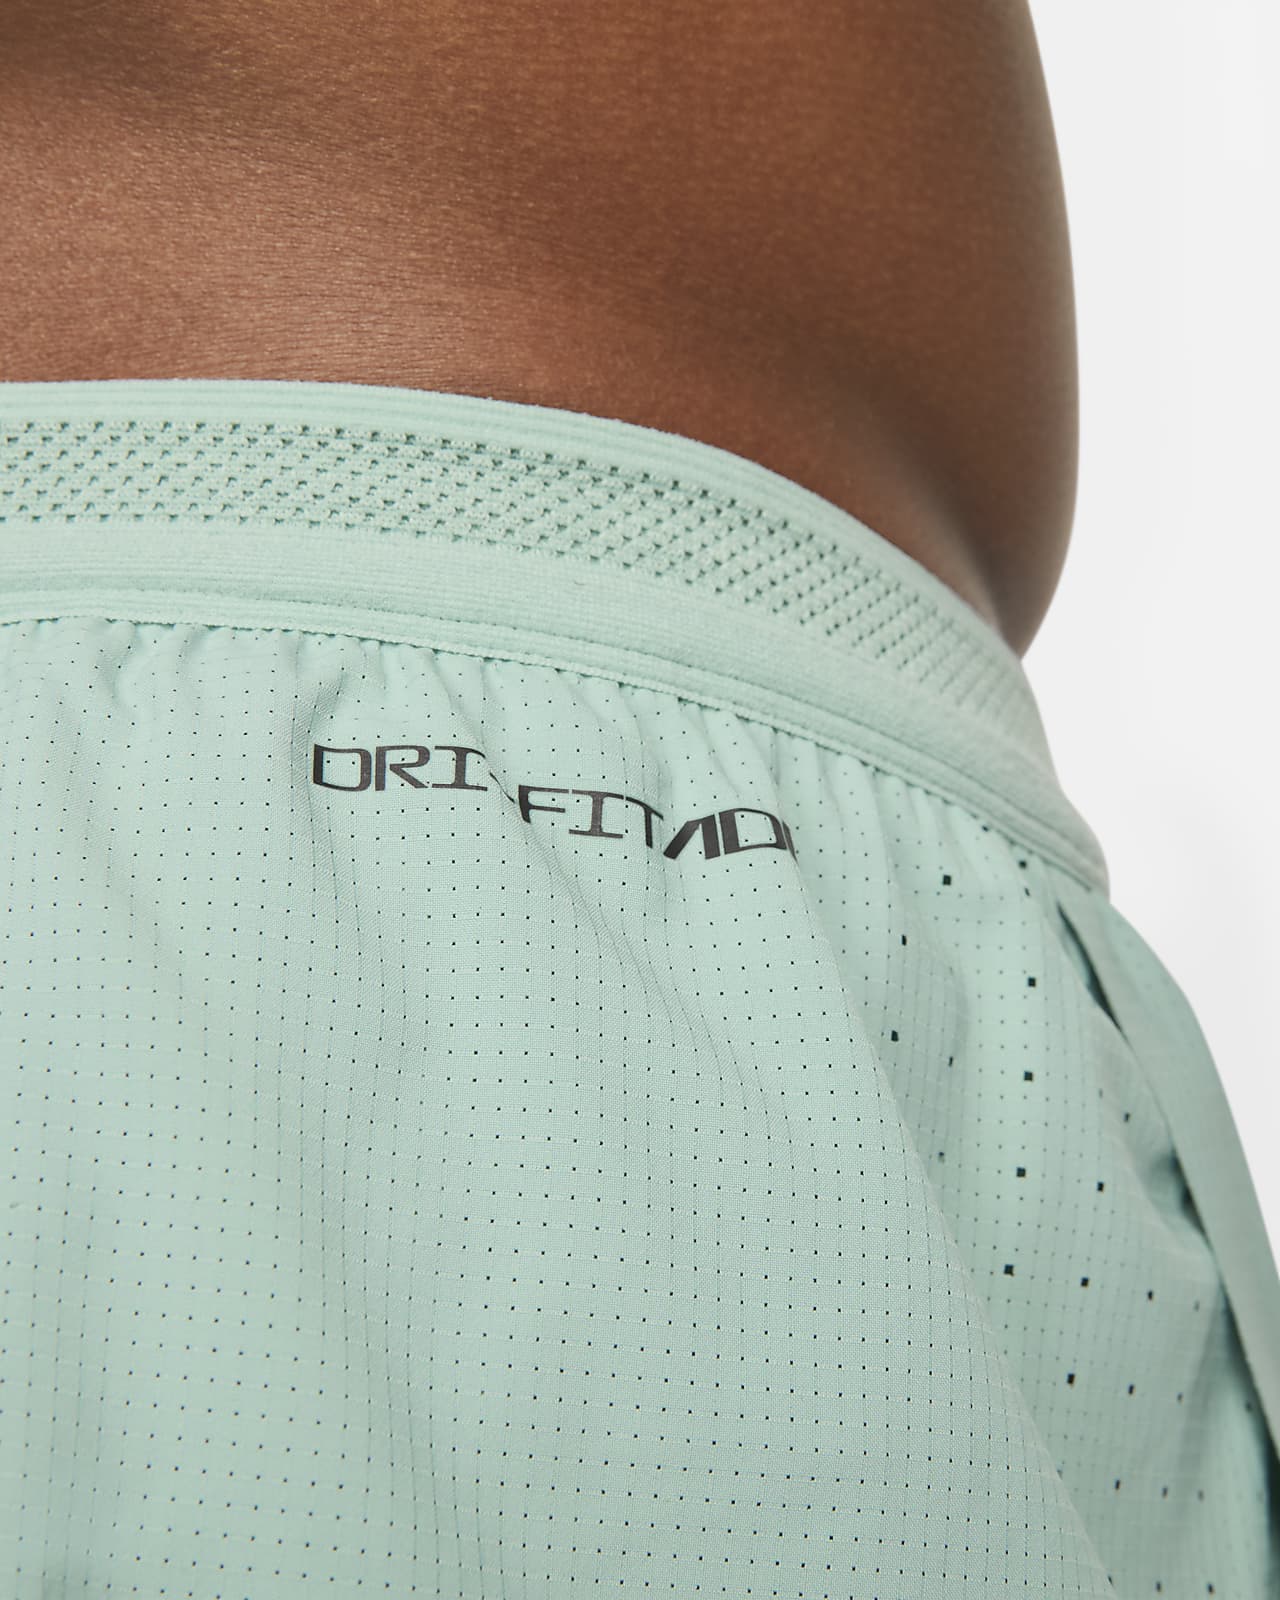 Nike AeroSwift Men's 2 Running Shorts CJ7837-010 (Black/White), Small :  : Clothing, Shoes & Accessories